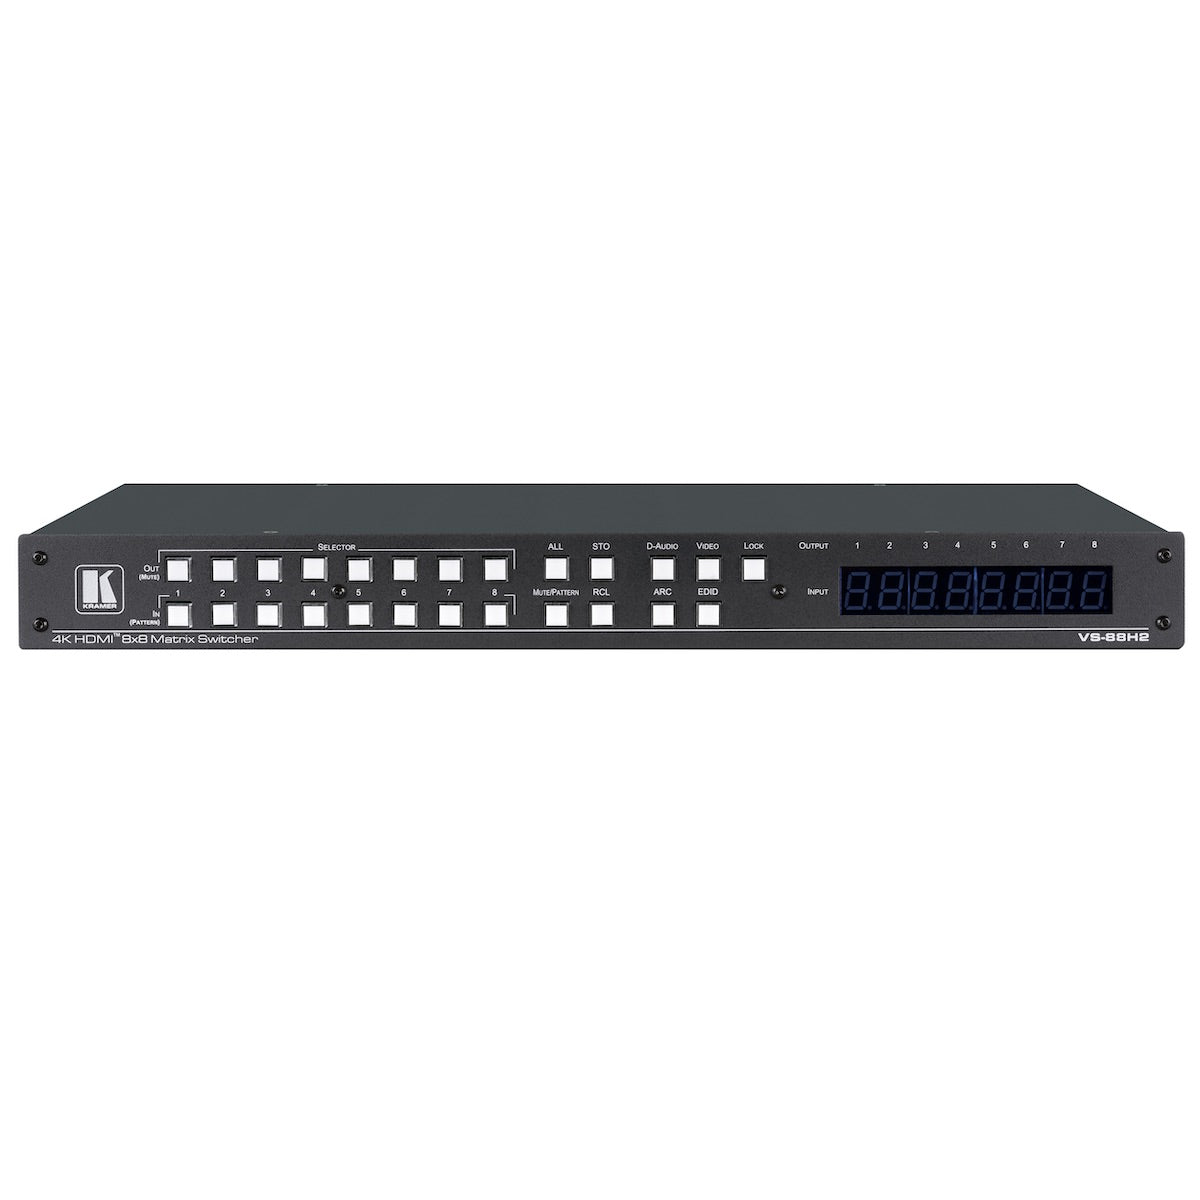 HDMI Matrix Video Switcher - 8x8 - 4K HDMI 1.4 - Control Switcher